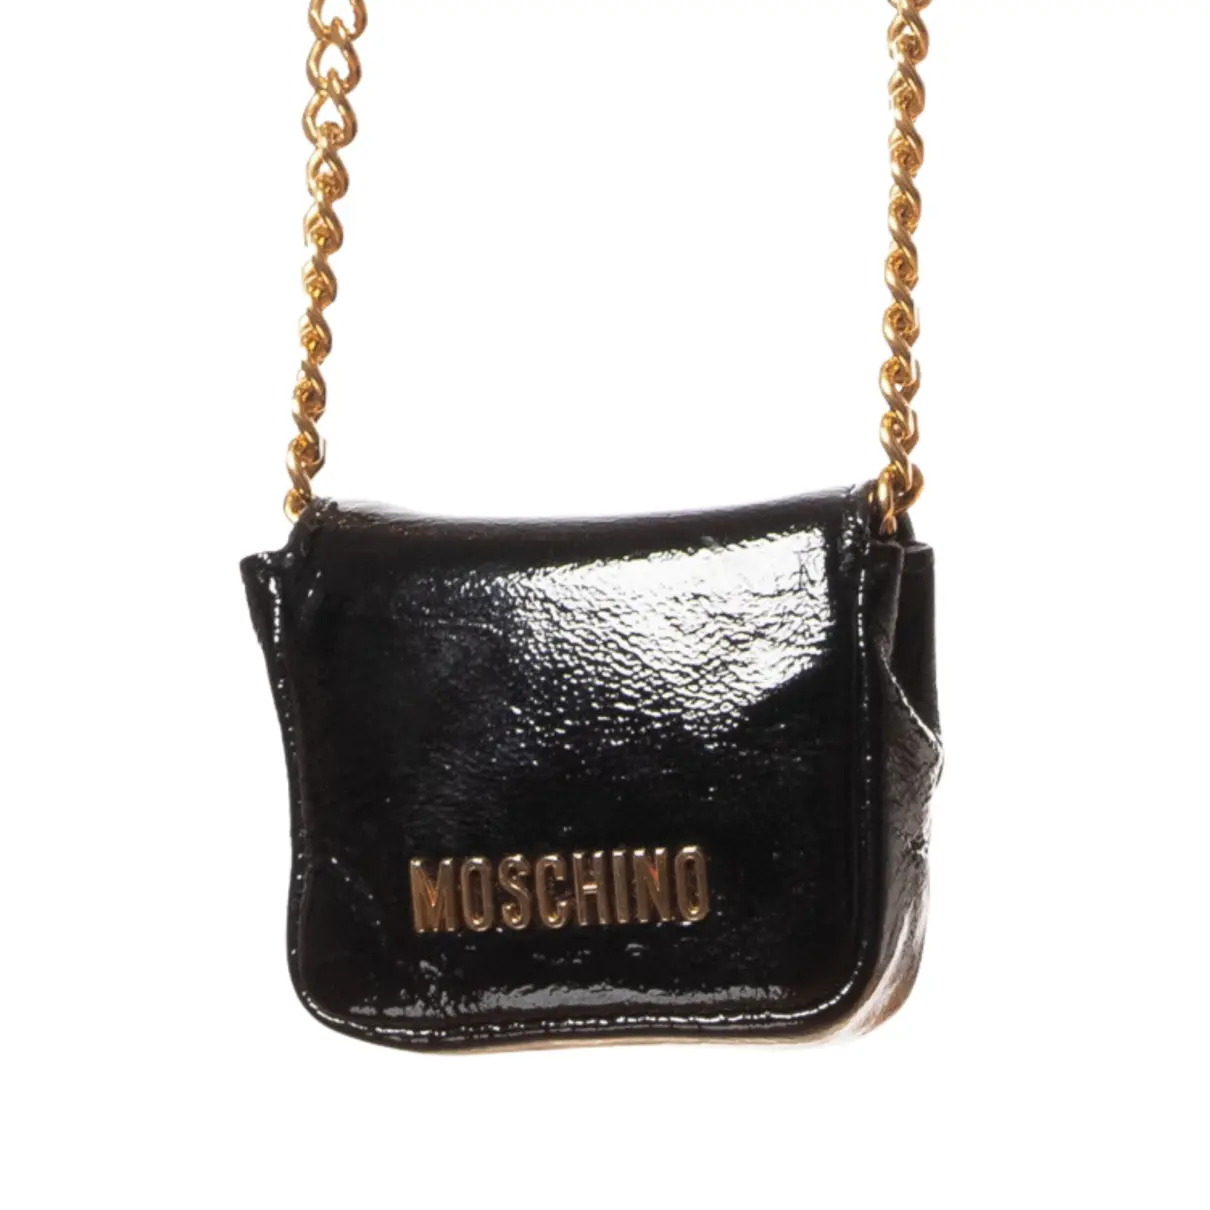 Patent leather mini bag Moschino